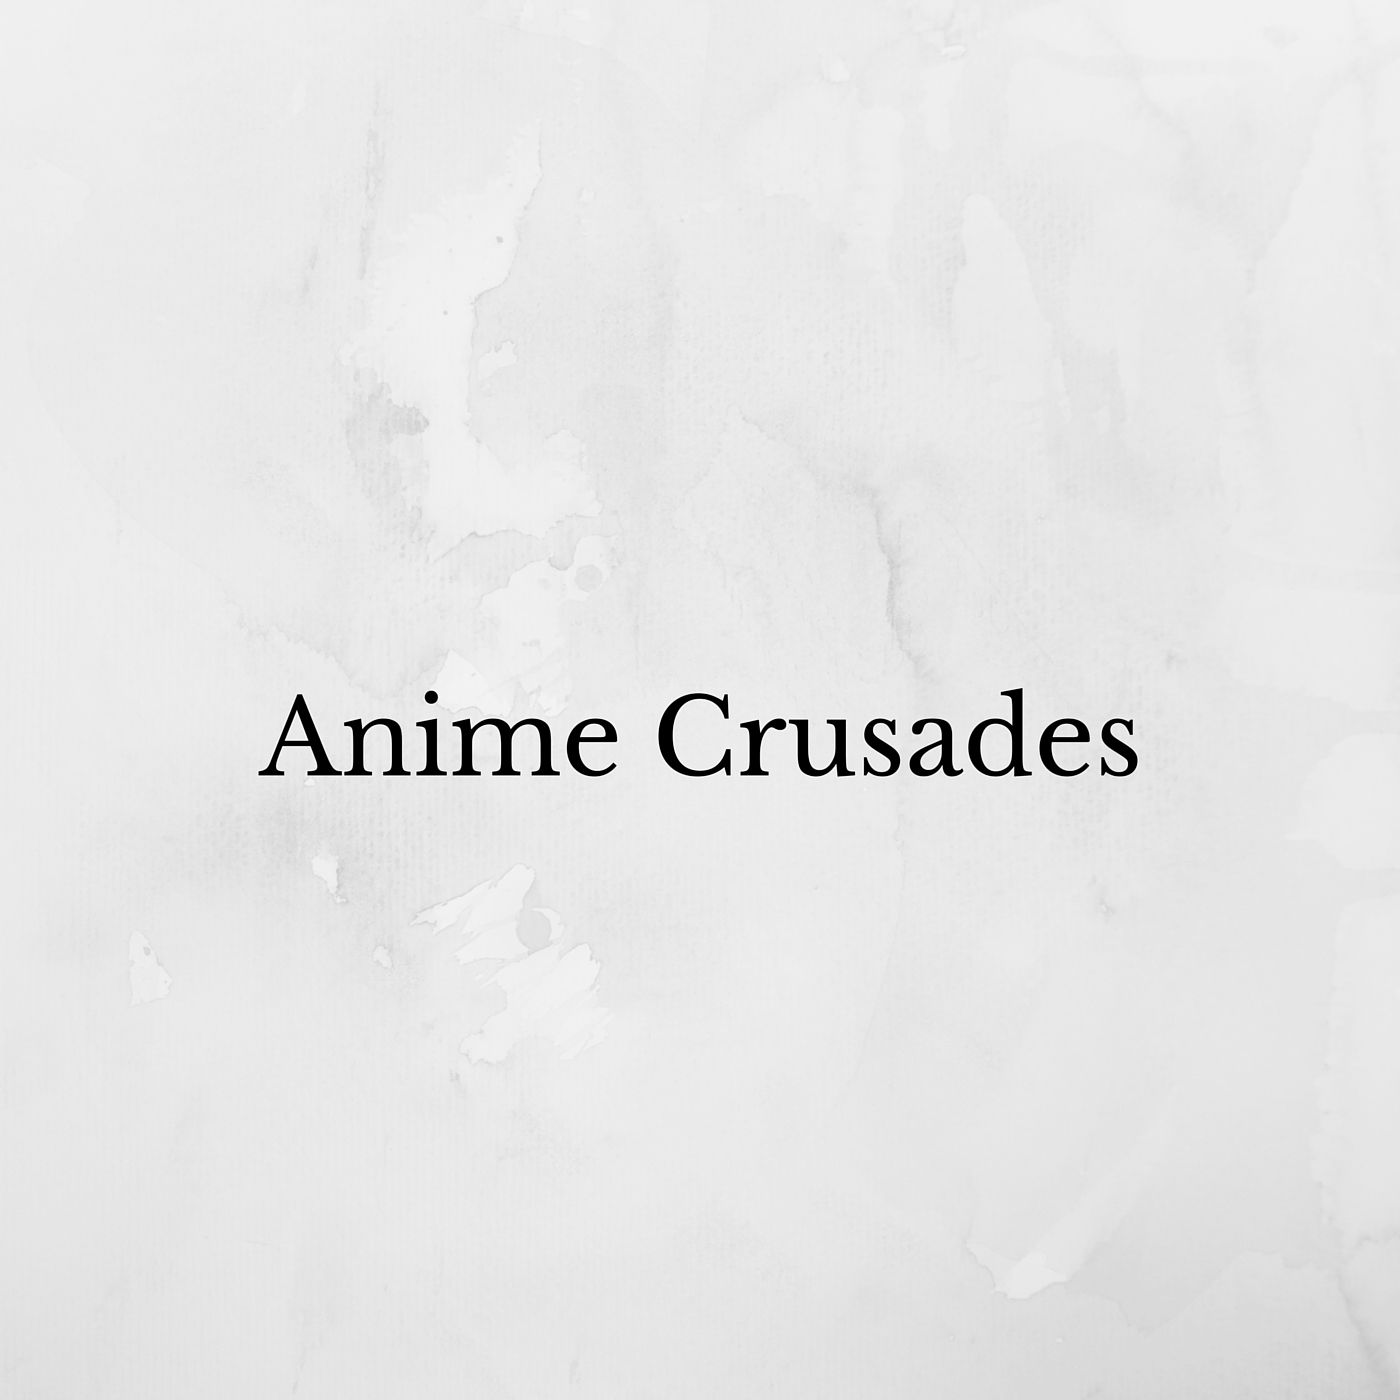 Anime Crusades